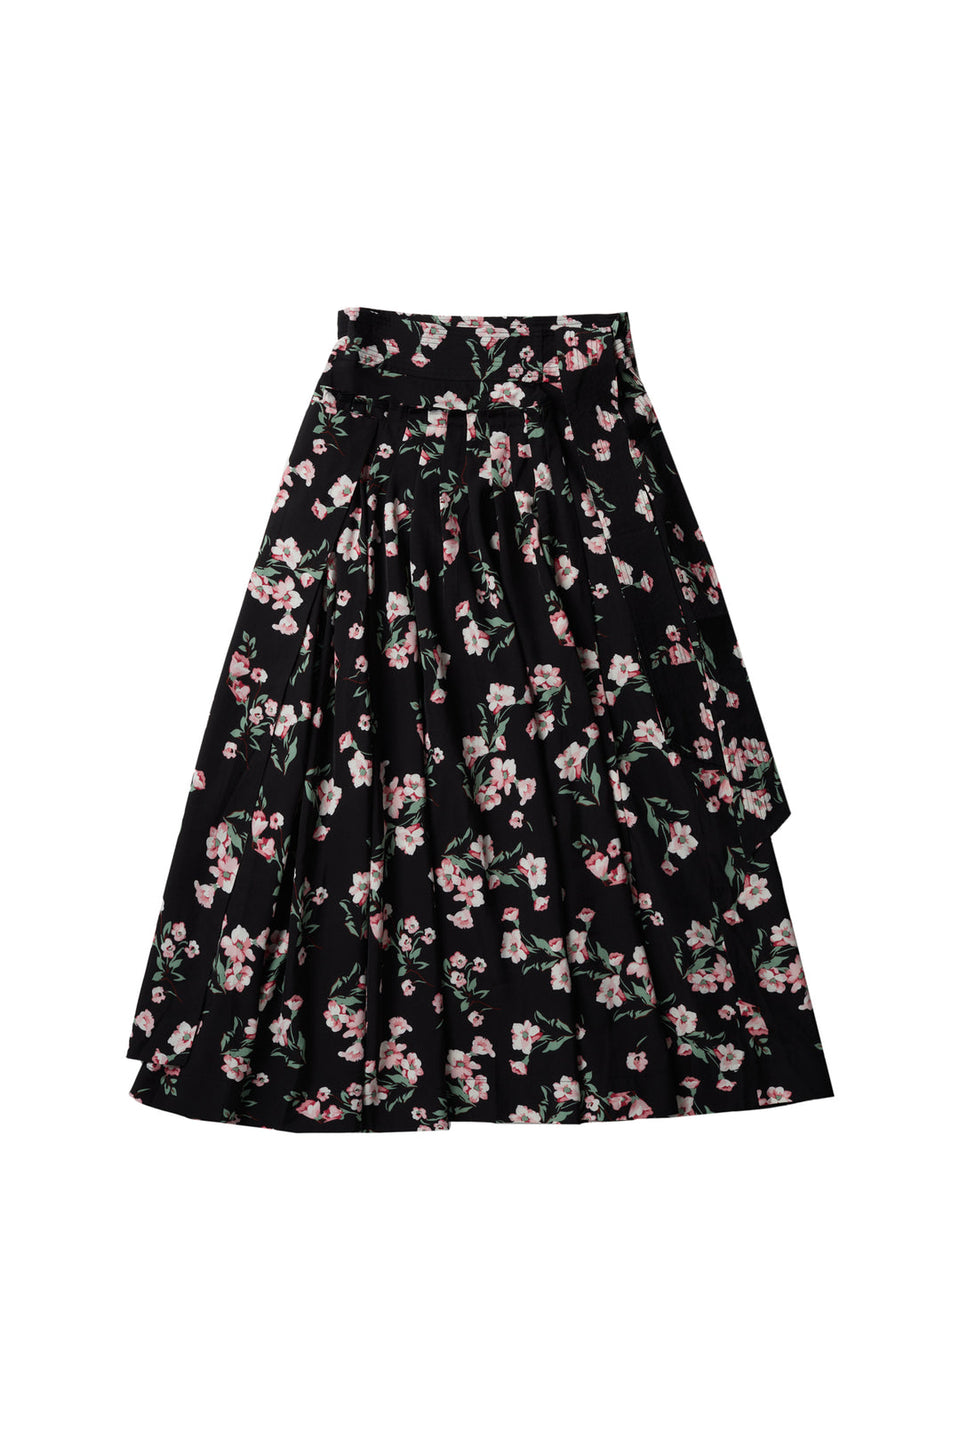 Zaikamoya Pink Floral Pleated Wrap Black Skirt